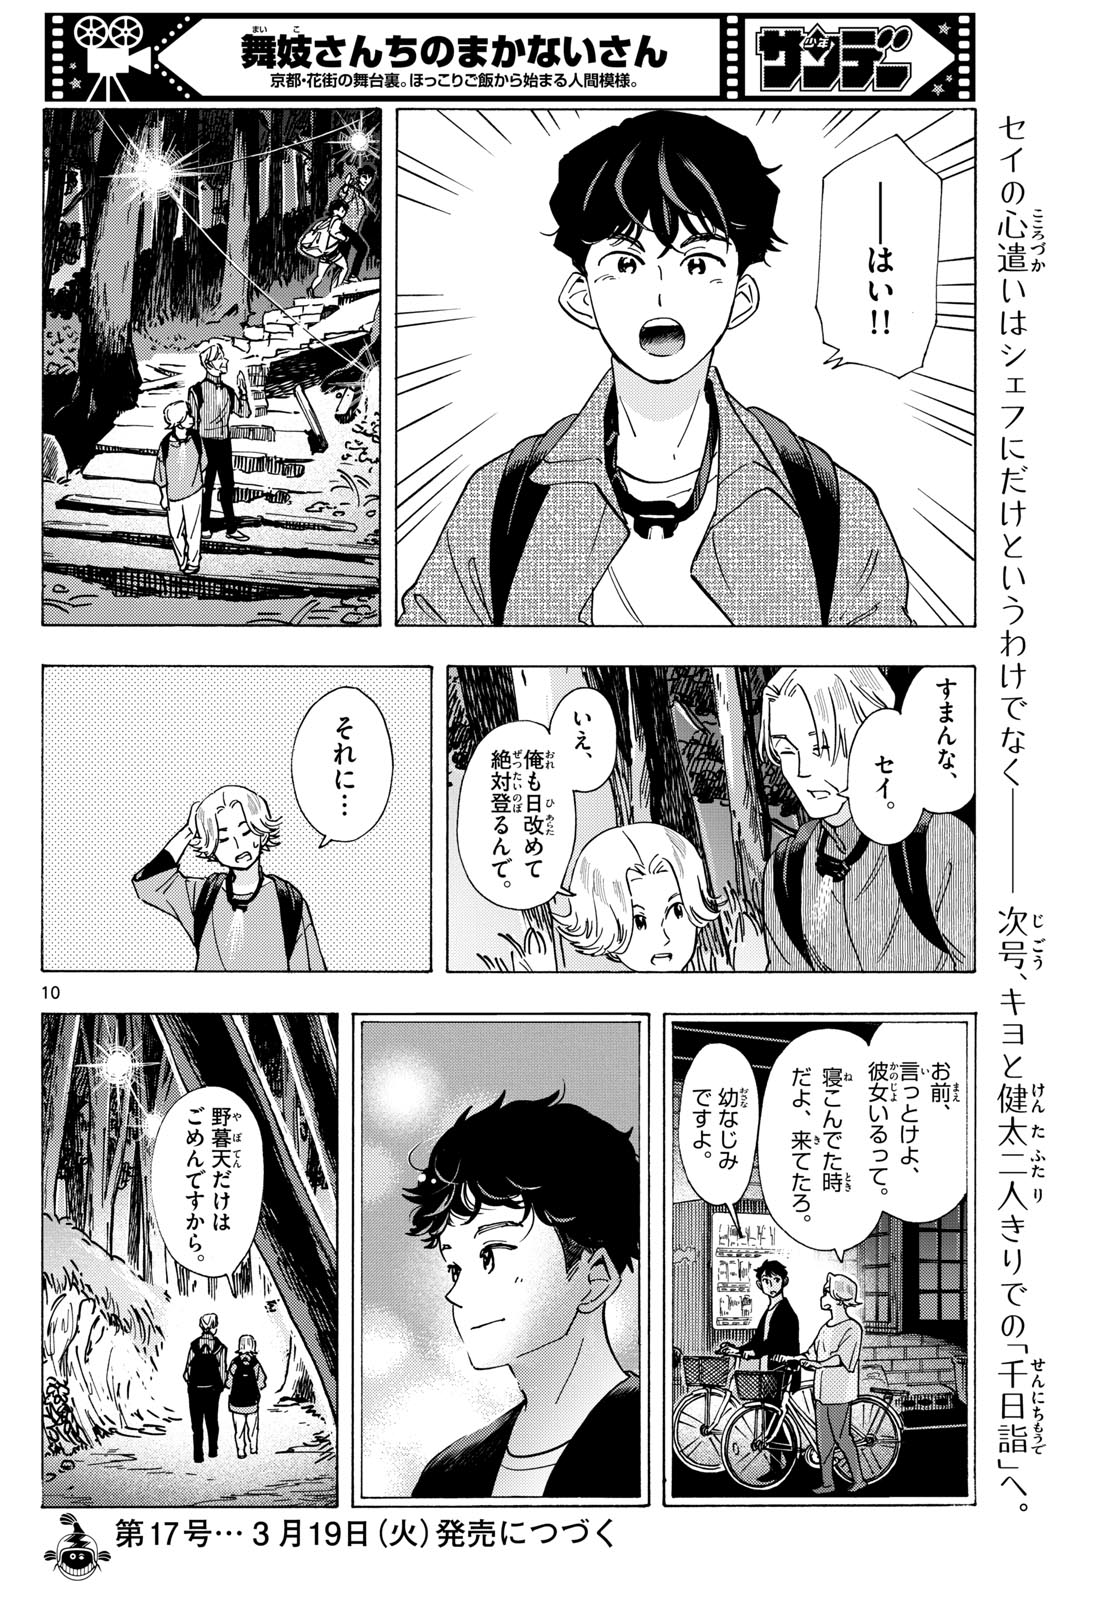 Maiko-san Chi no Makanai-san - Chapter 296 - Page 10